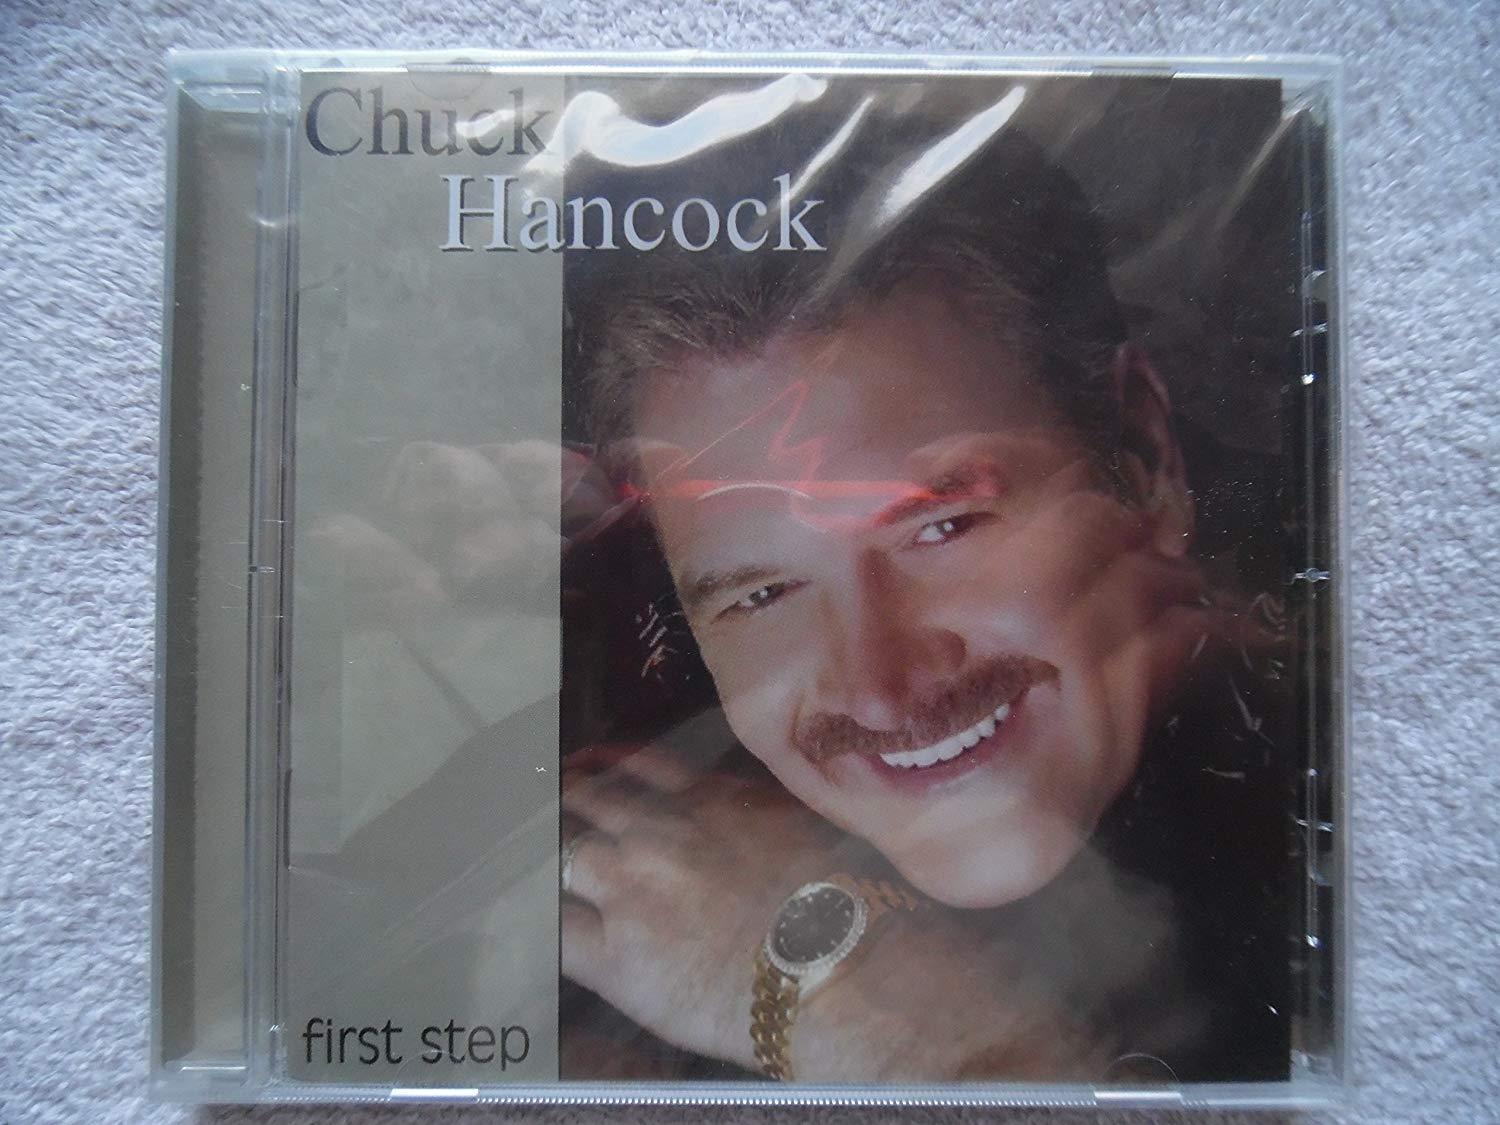 CHUCK HANCOCK FIRST STEP CD